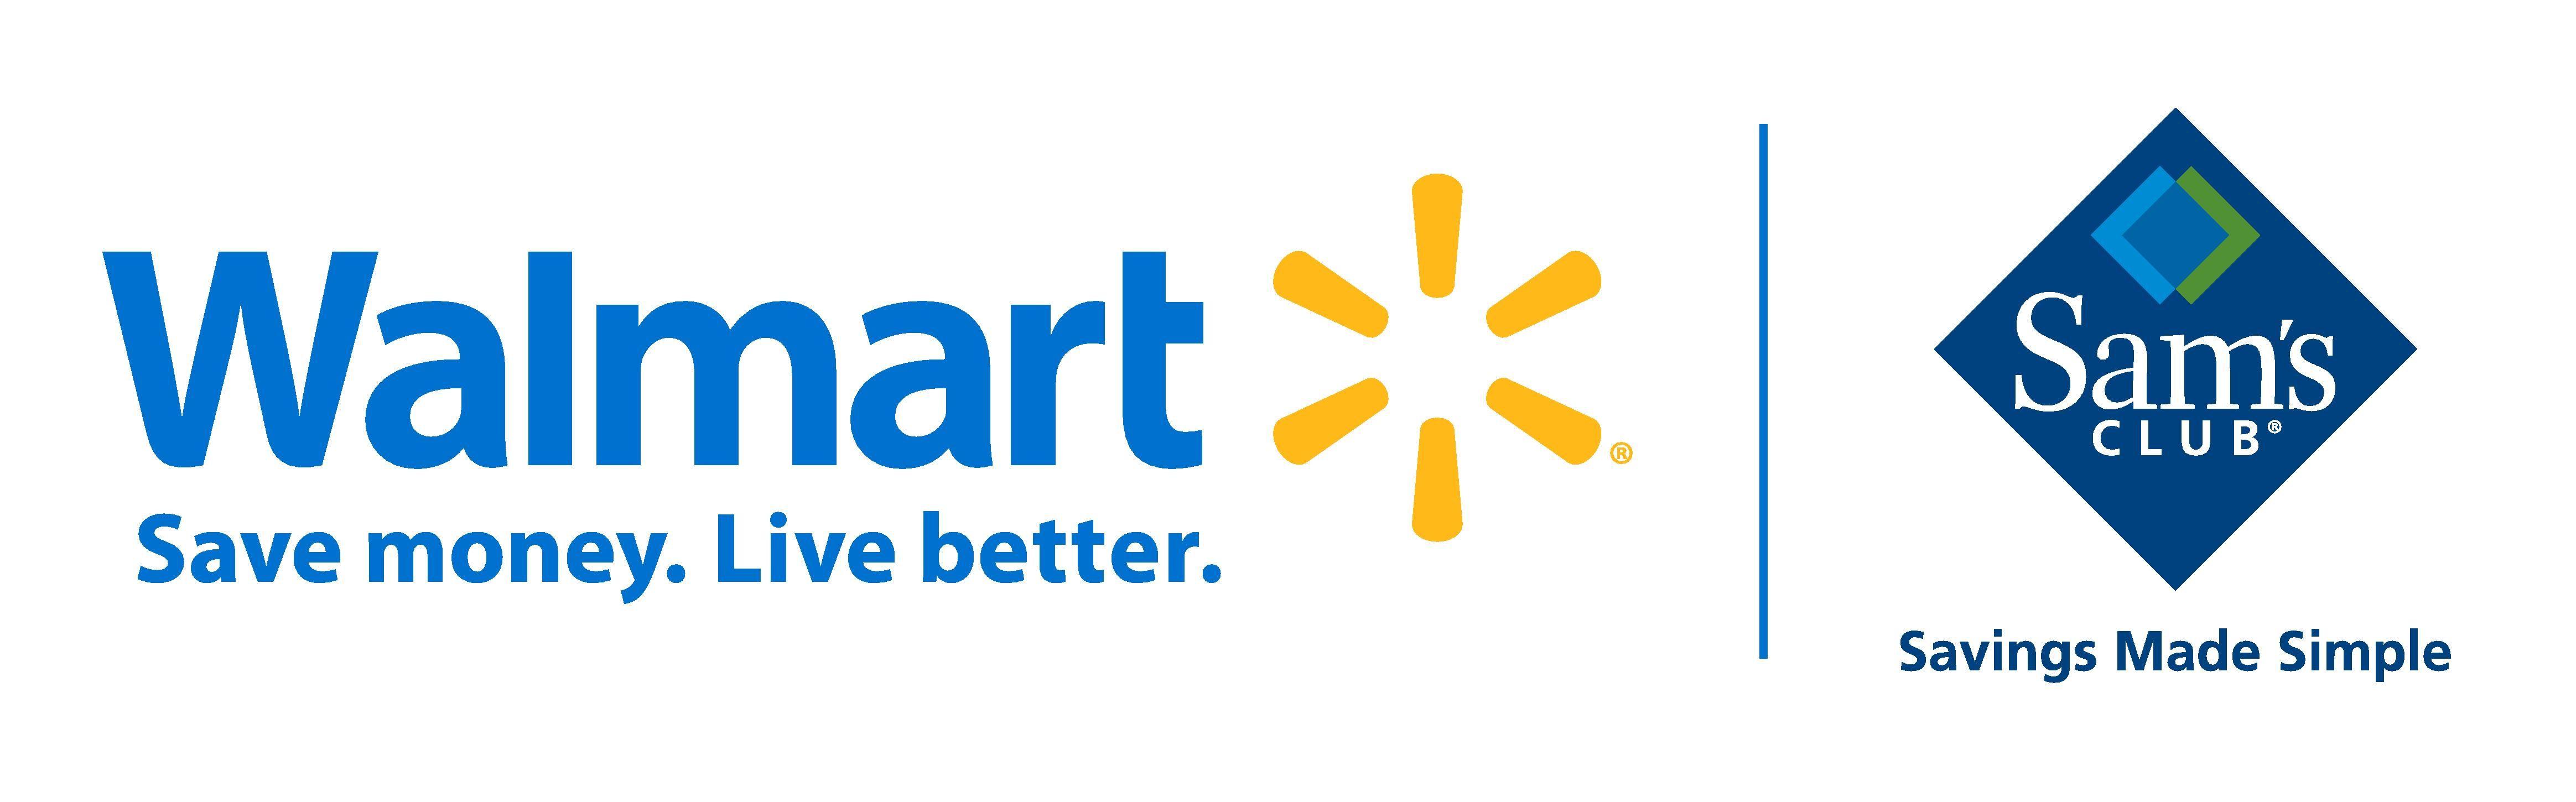 Pay Walmart Logo - Walmart to bump worker pay; Q4 sales up